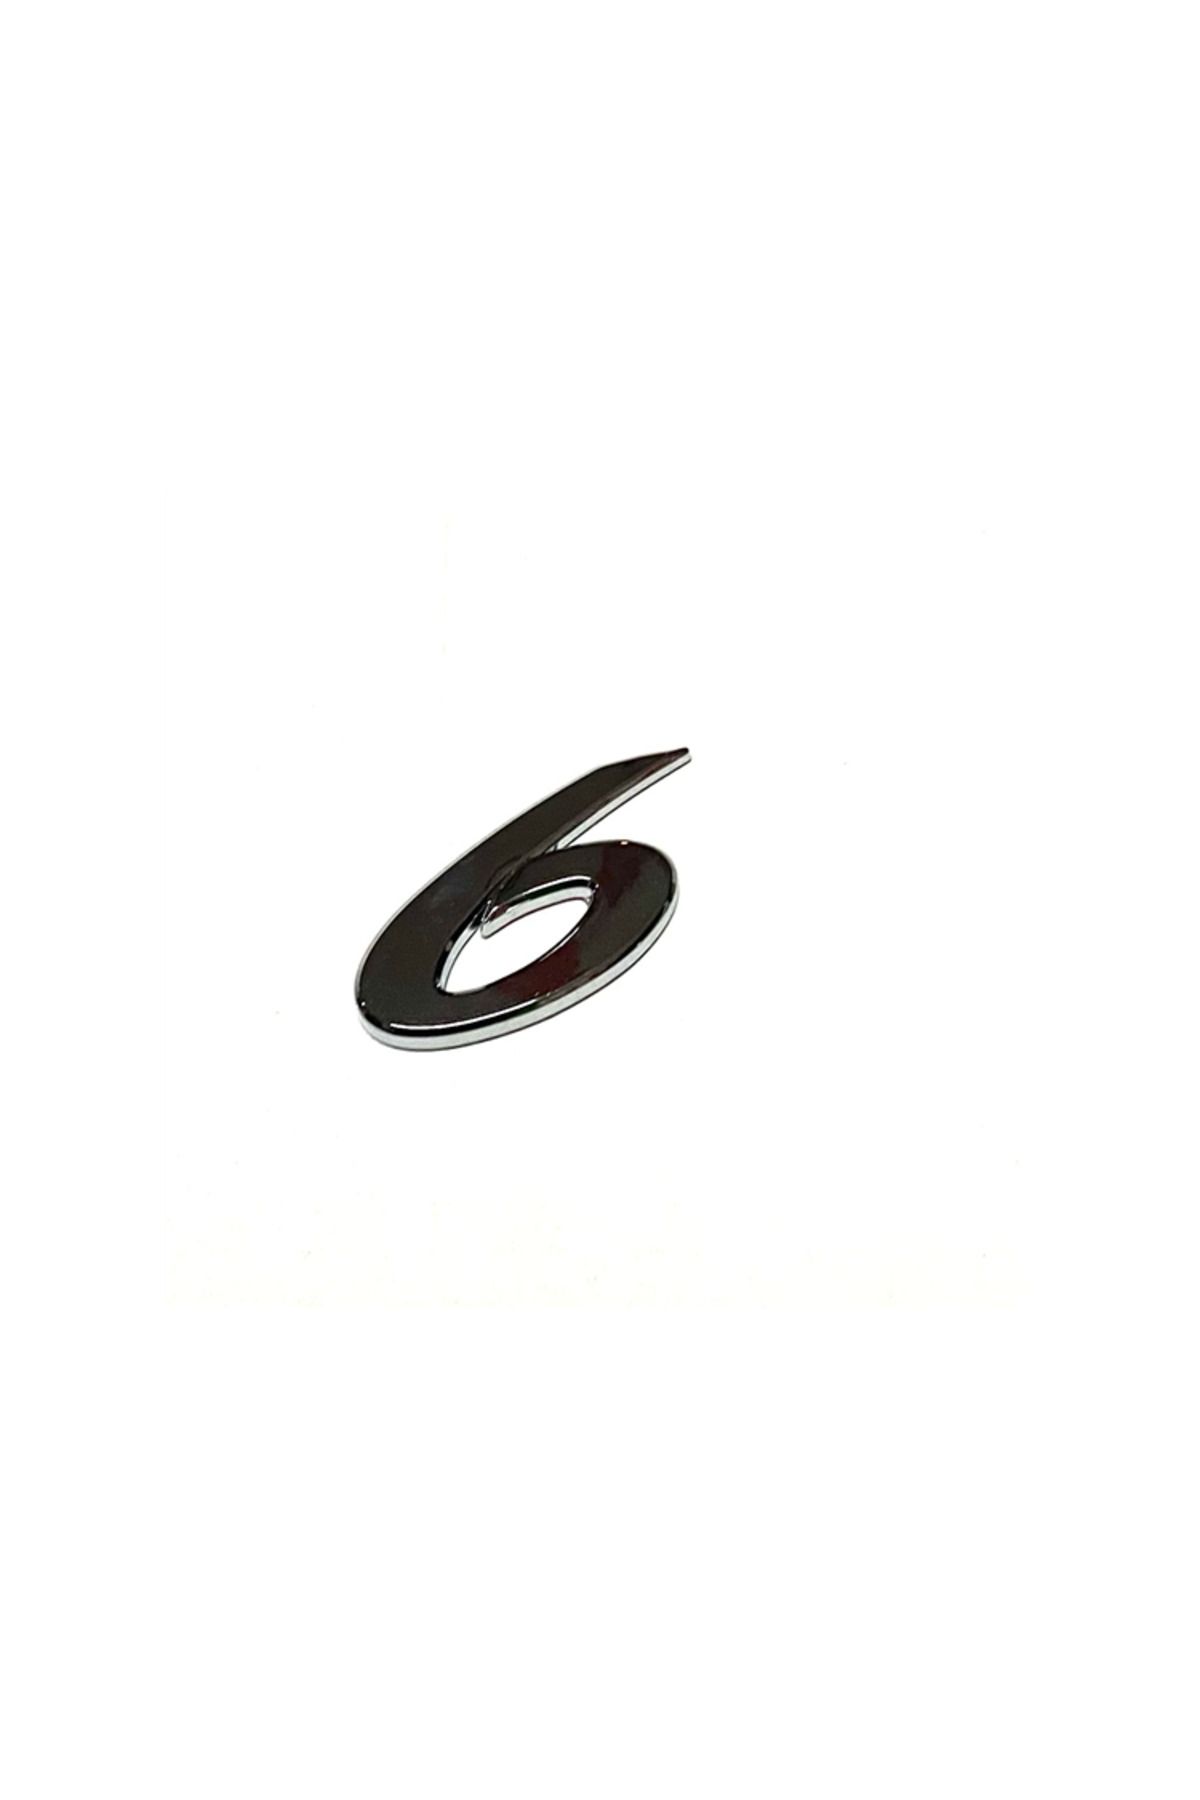 İTAQİ Yazı Mazda 6 2003-2008 Arka (6 RAKAMI)-[product_code]